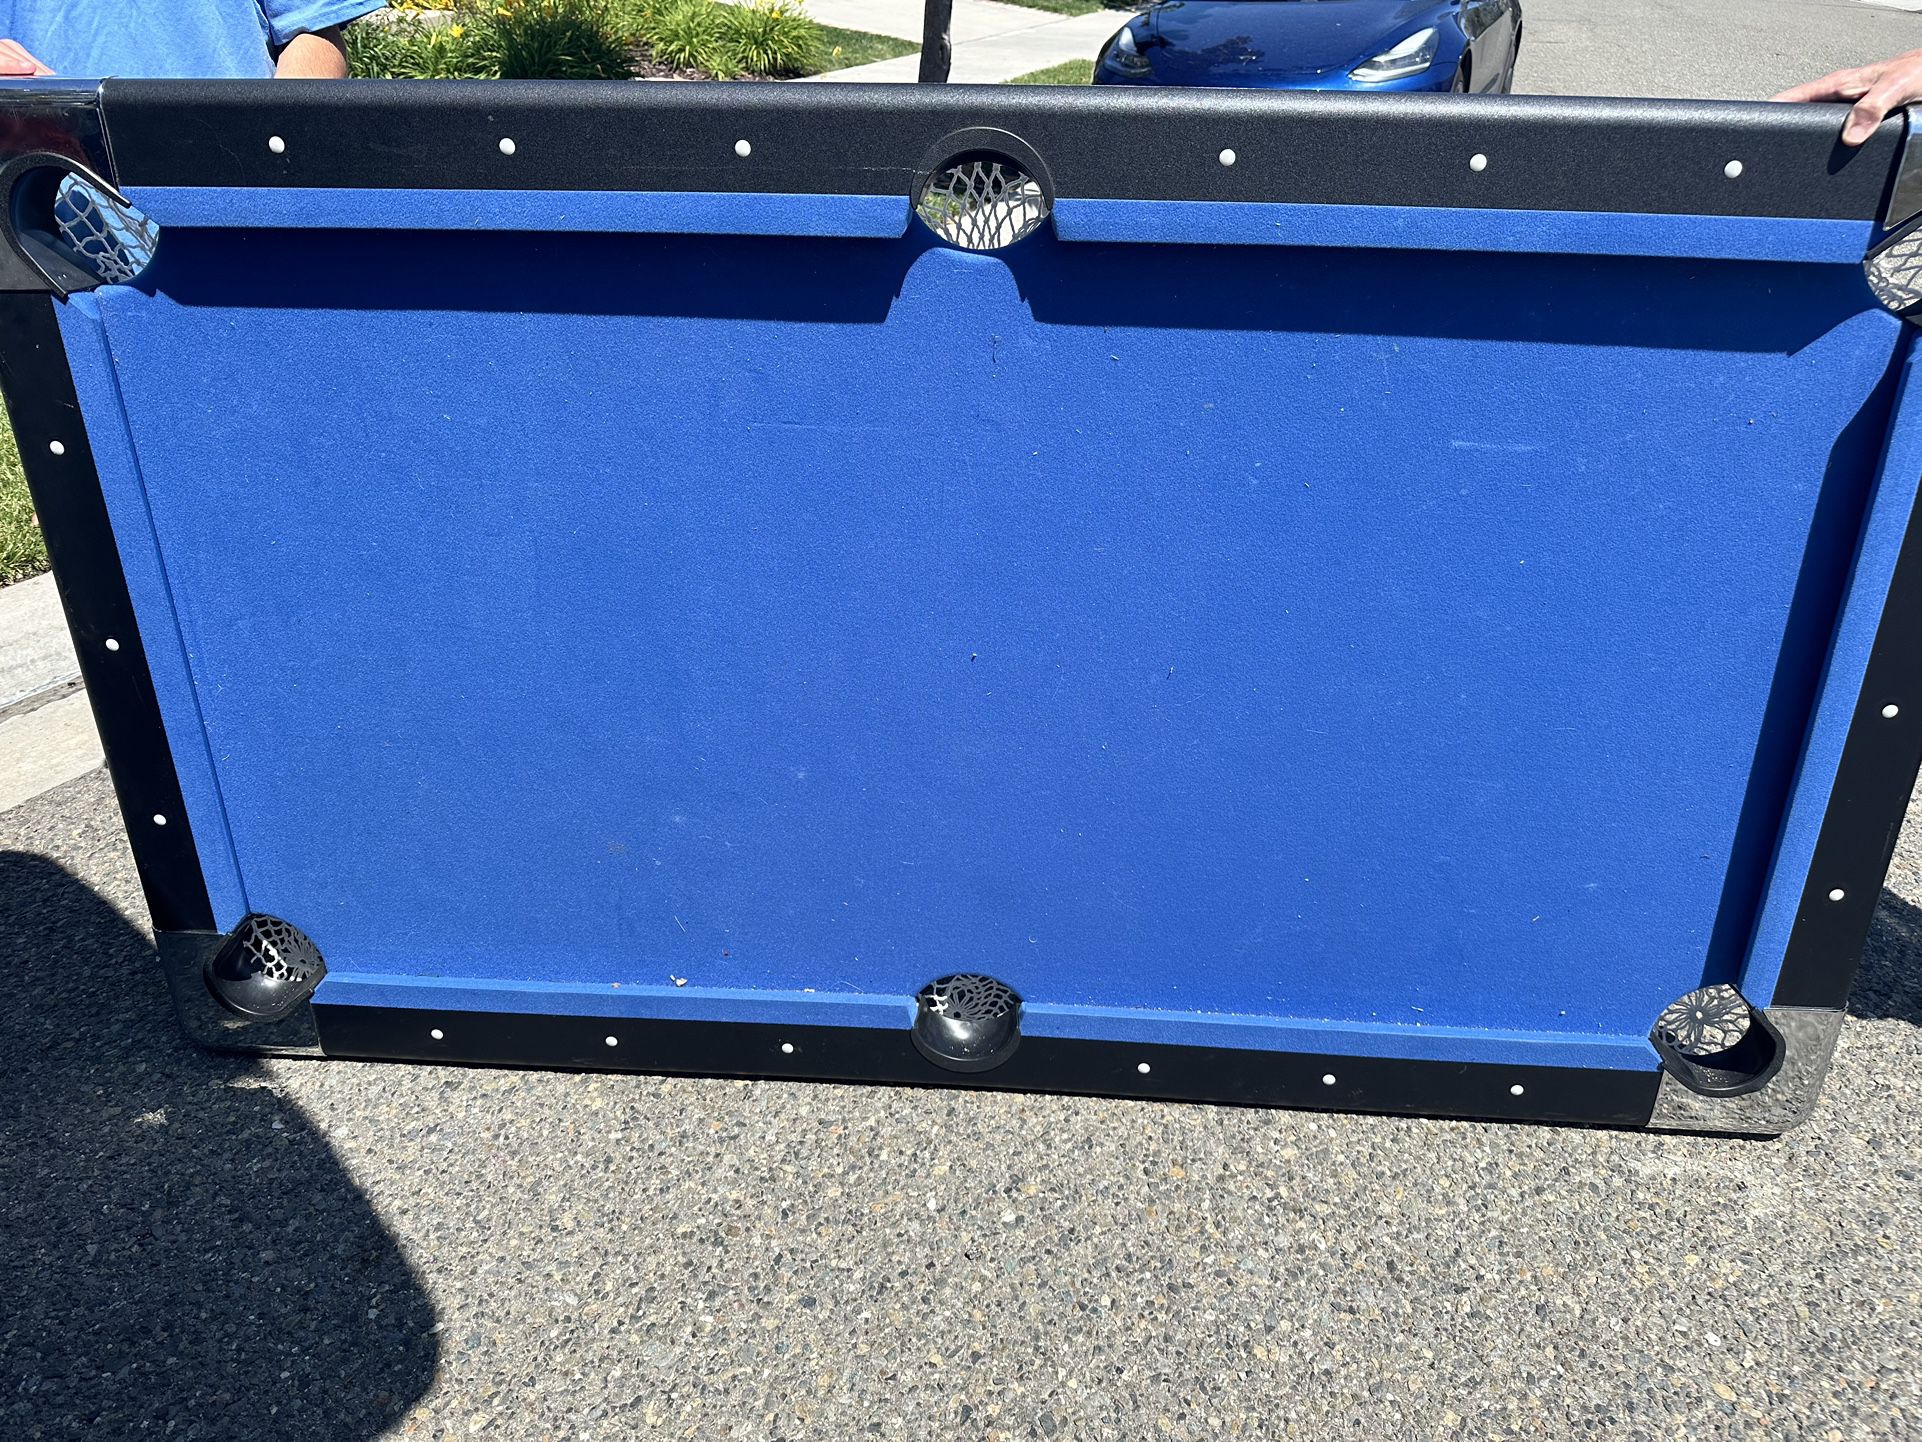 Portable pool table